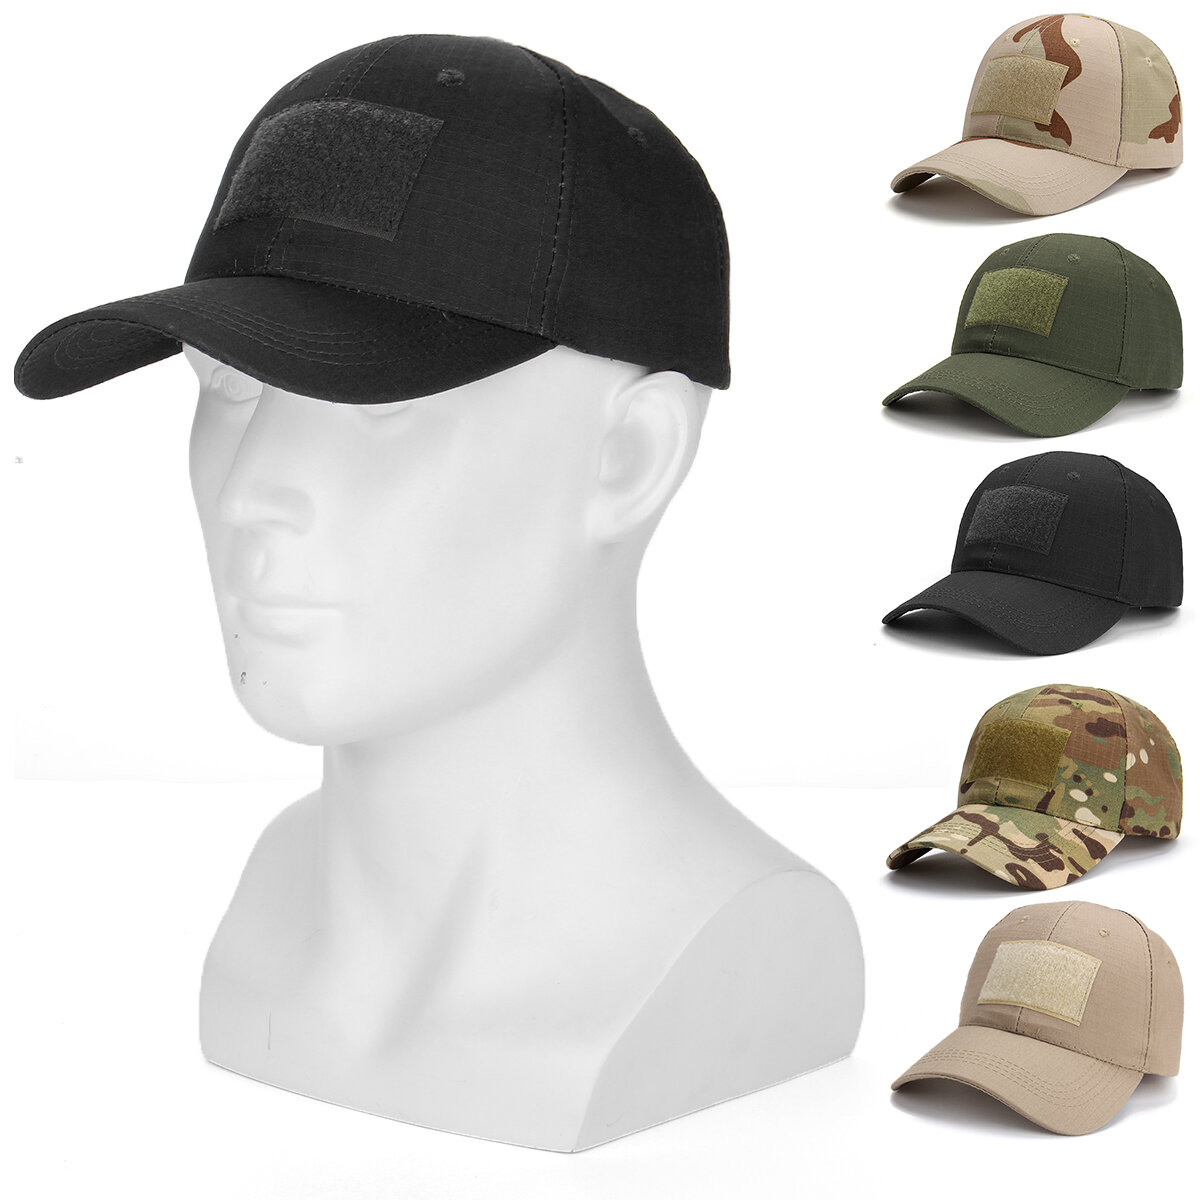 Unisex Camouflage Cap Baseball Cap Verstelbare Militaire Operator Hoeden Mannen Vrouwen Volwassen Grootte